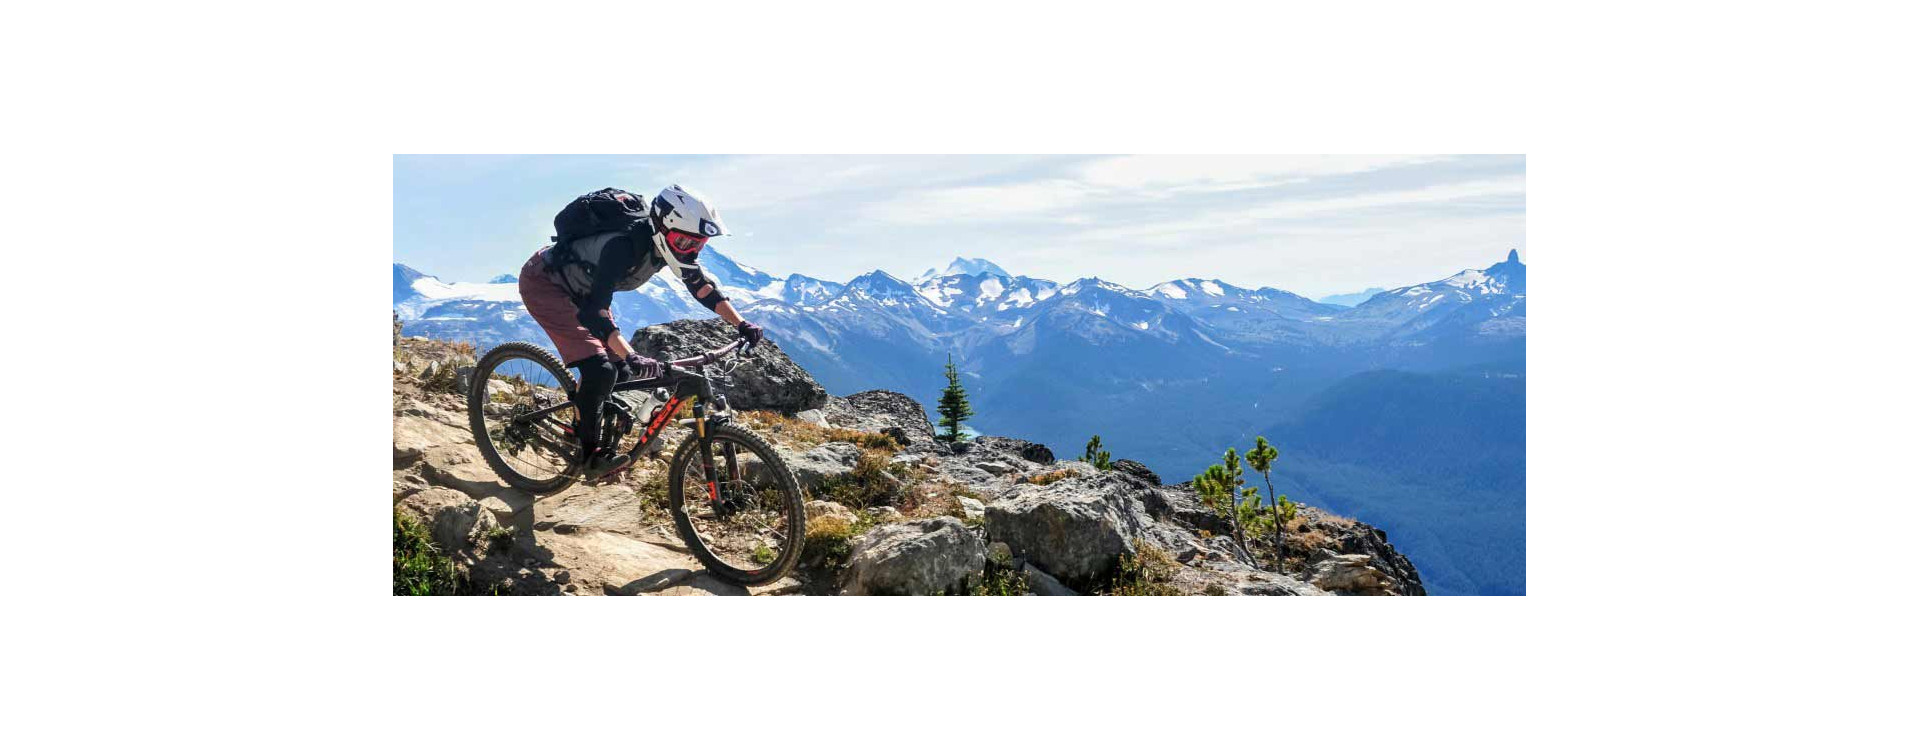 Mountain biking in Canada: where are the mountain bike trails?